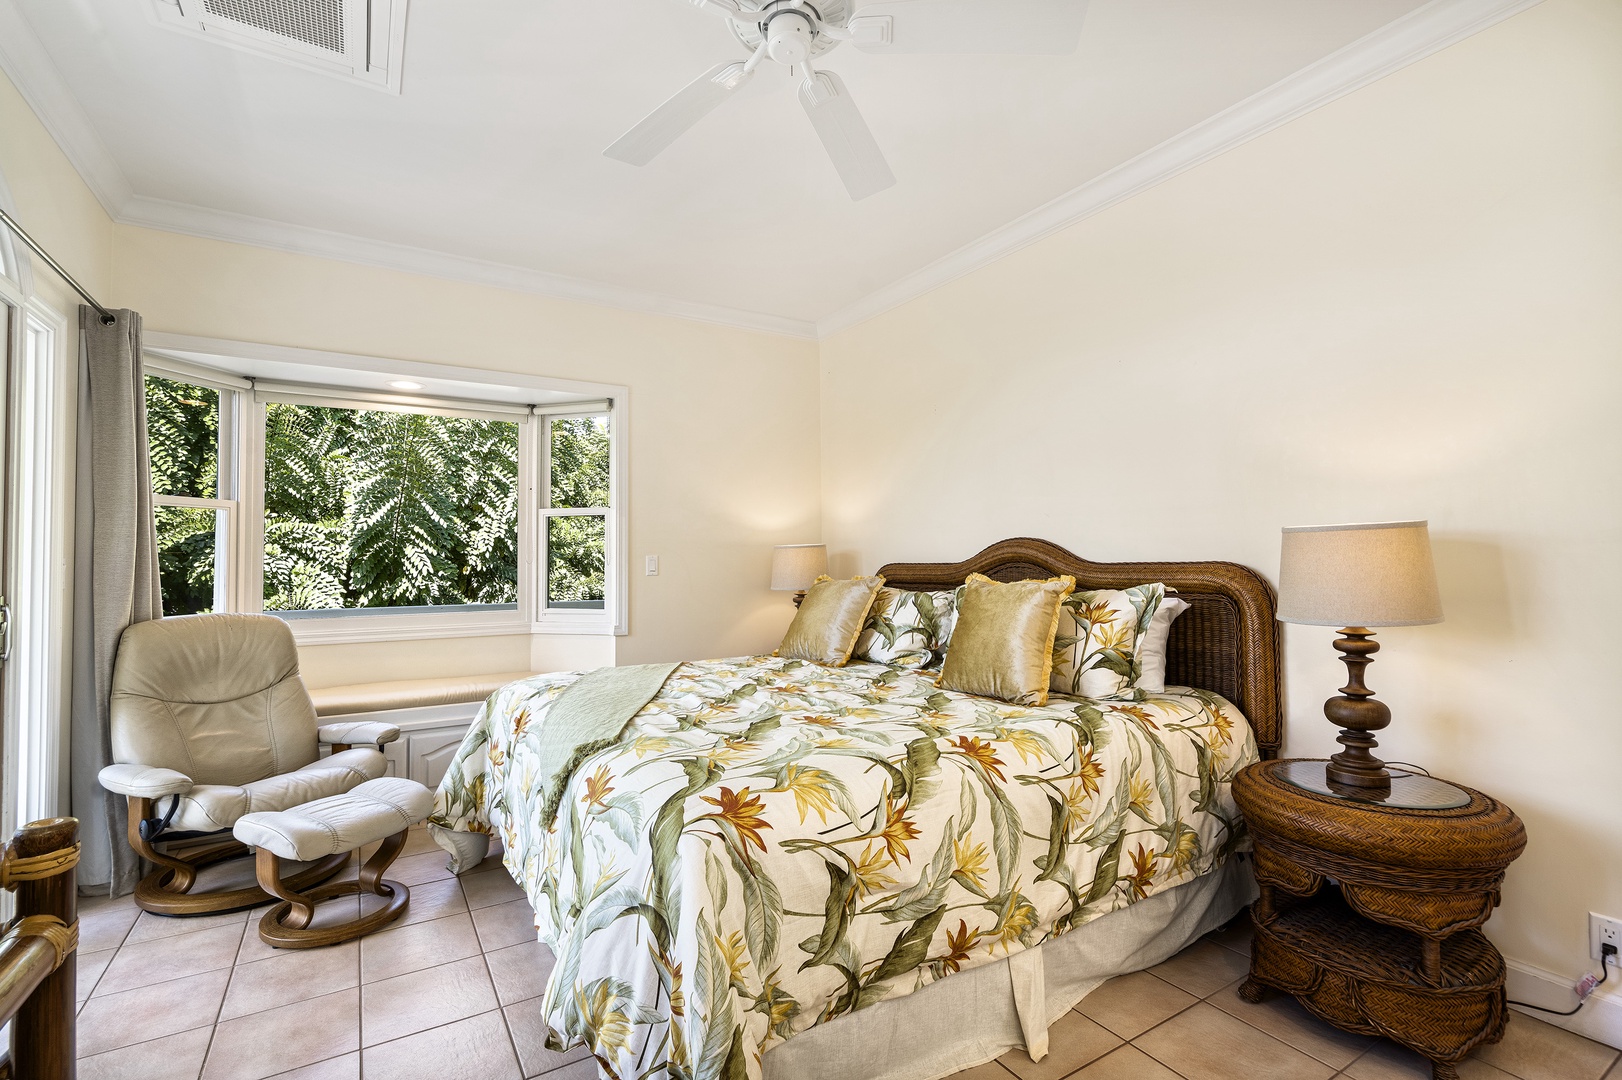 Kailua Kona Vacation Rentals, Dolphin Manor - Upstairs 316 sqft guest bedroom (room 3)